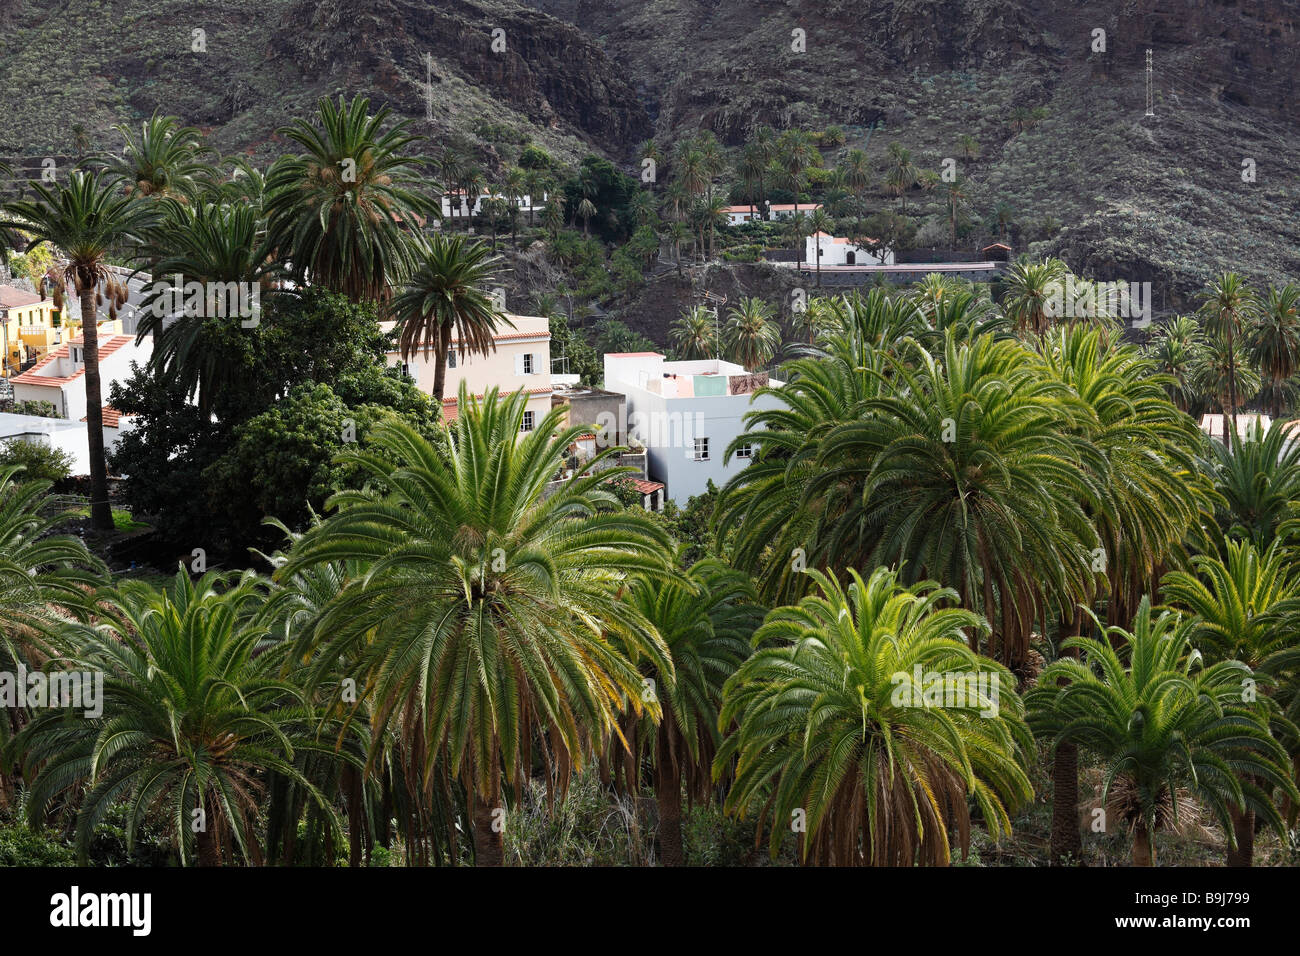 Canary Island Date Palms (Phoenix canariensis), El Guro, Valle Gran Rey, La Gomera, Canary Islands, Spain, Europe Stock Photo